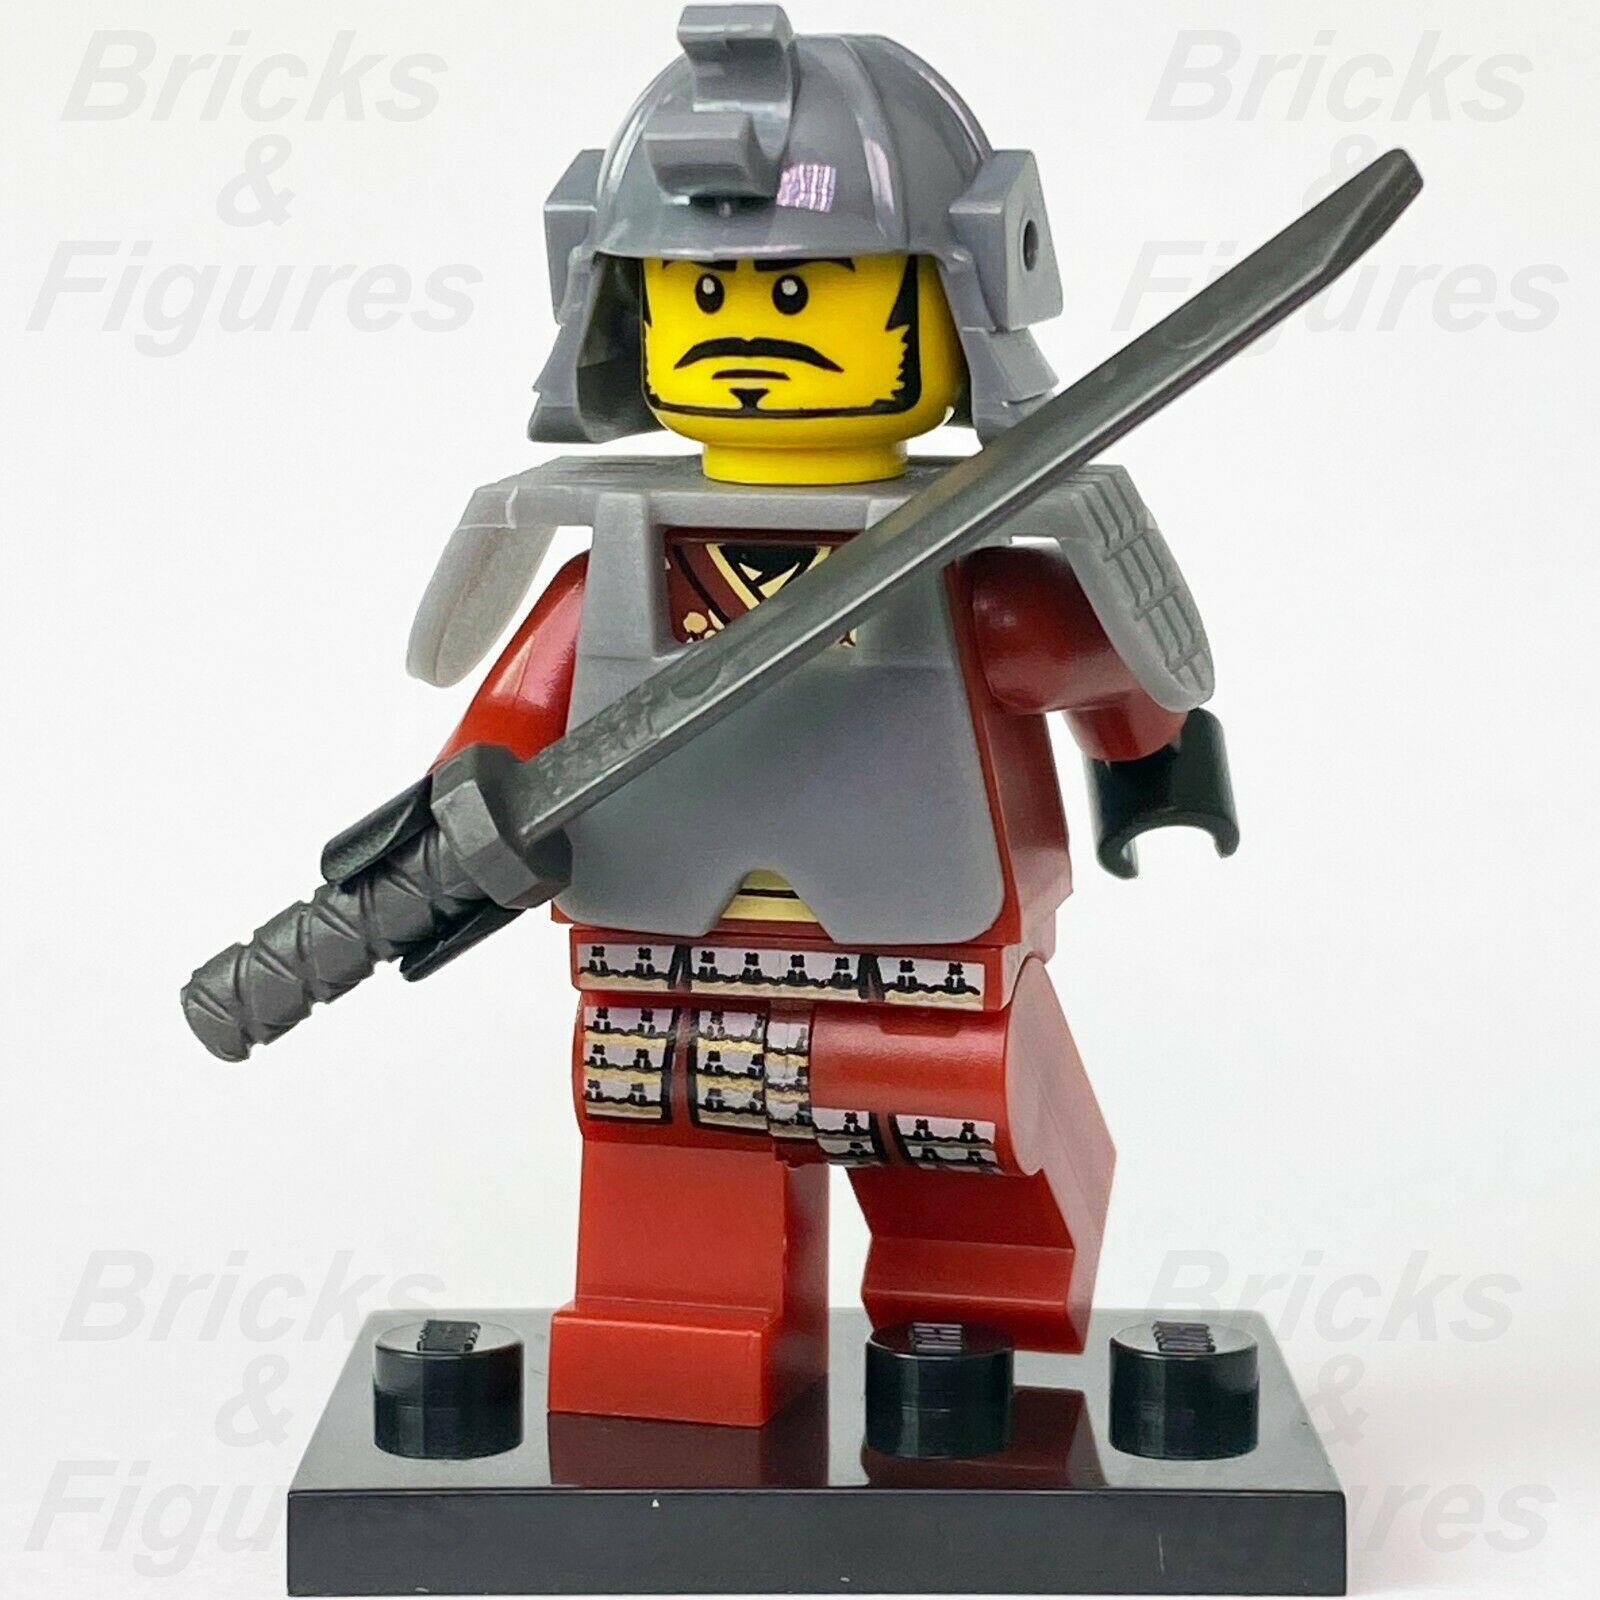 New Collectible Minifigures LEGO Samurai Warrior Soldier Series 3 Minifig 8803 - Bricks & Figures